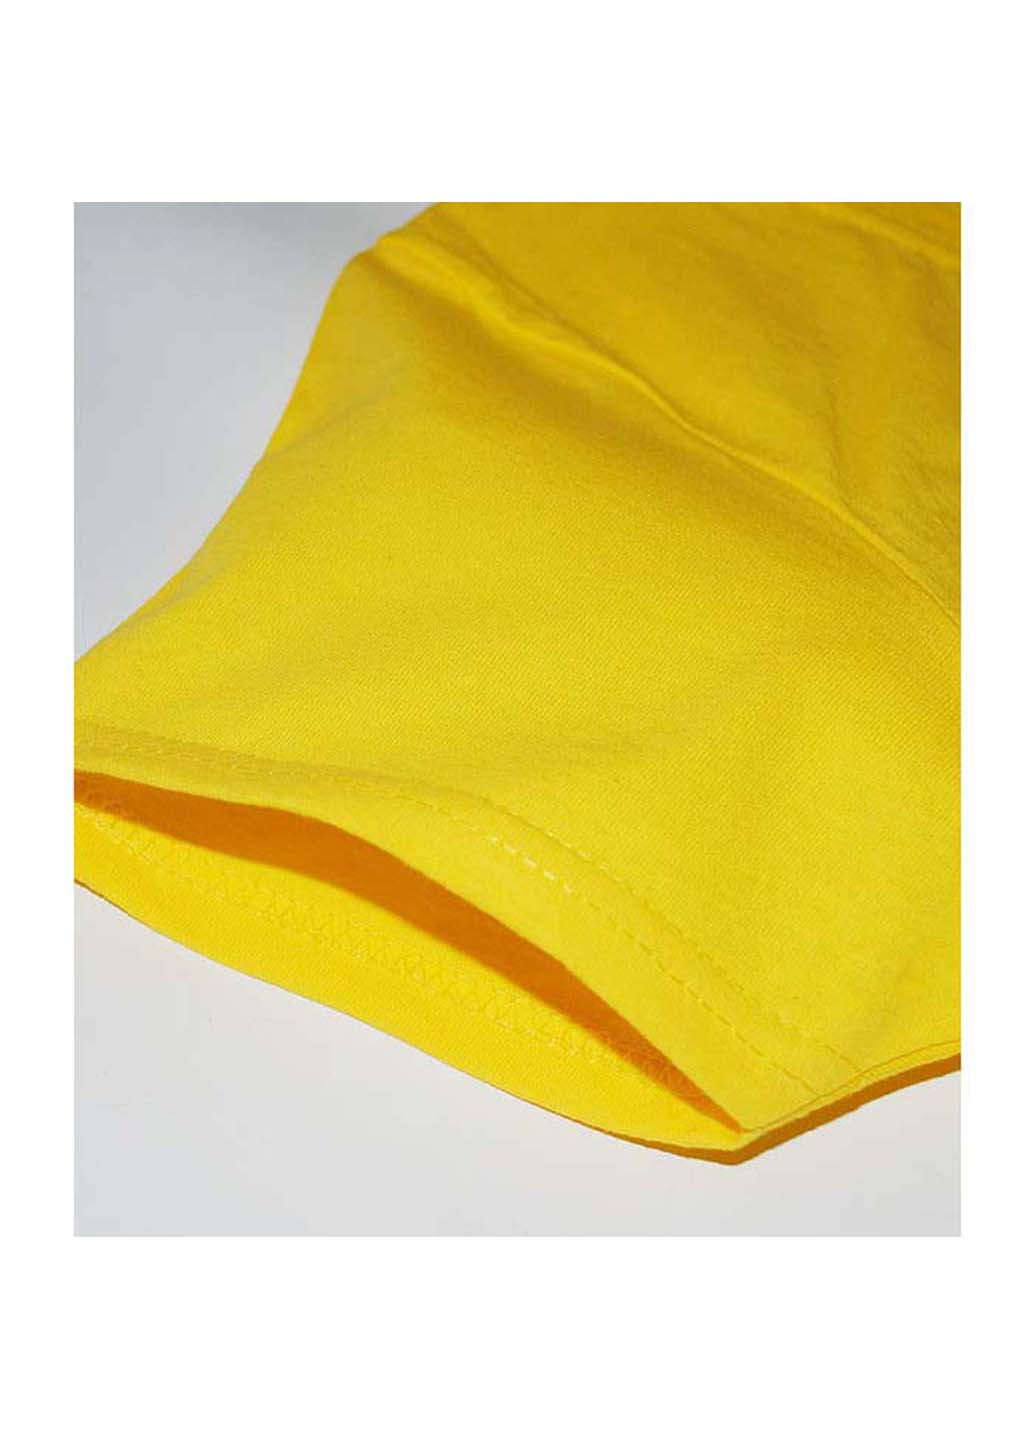 Желтая демисезон футболка Fruit of the Loom 0614200K2XXL